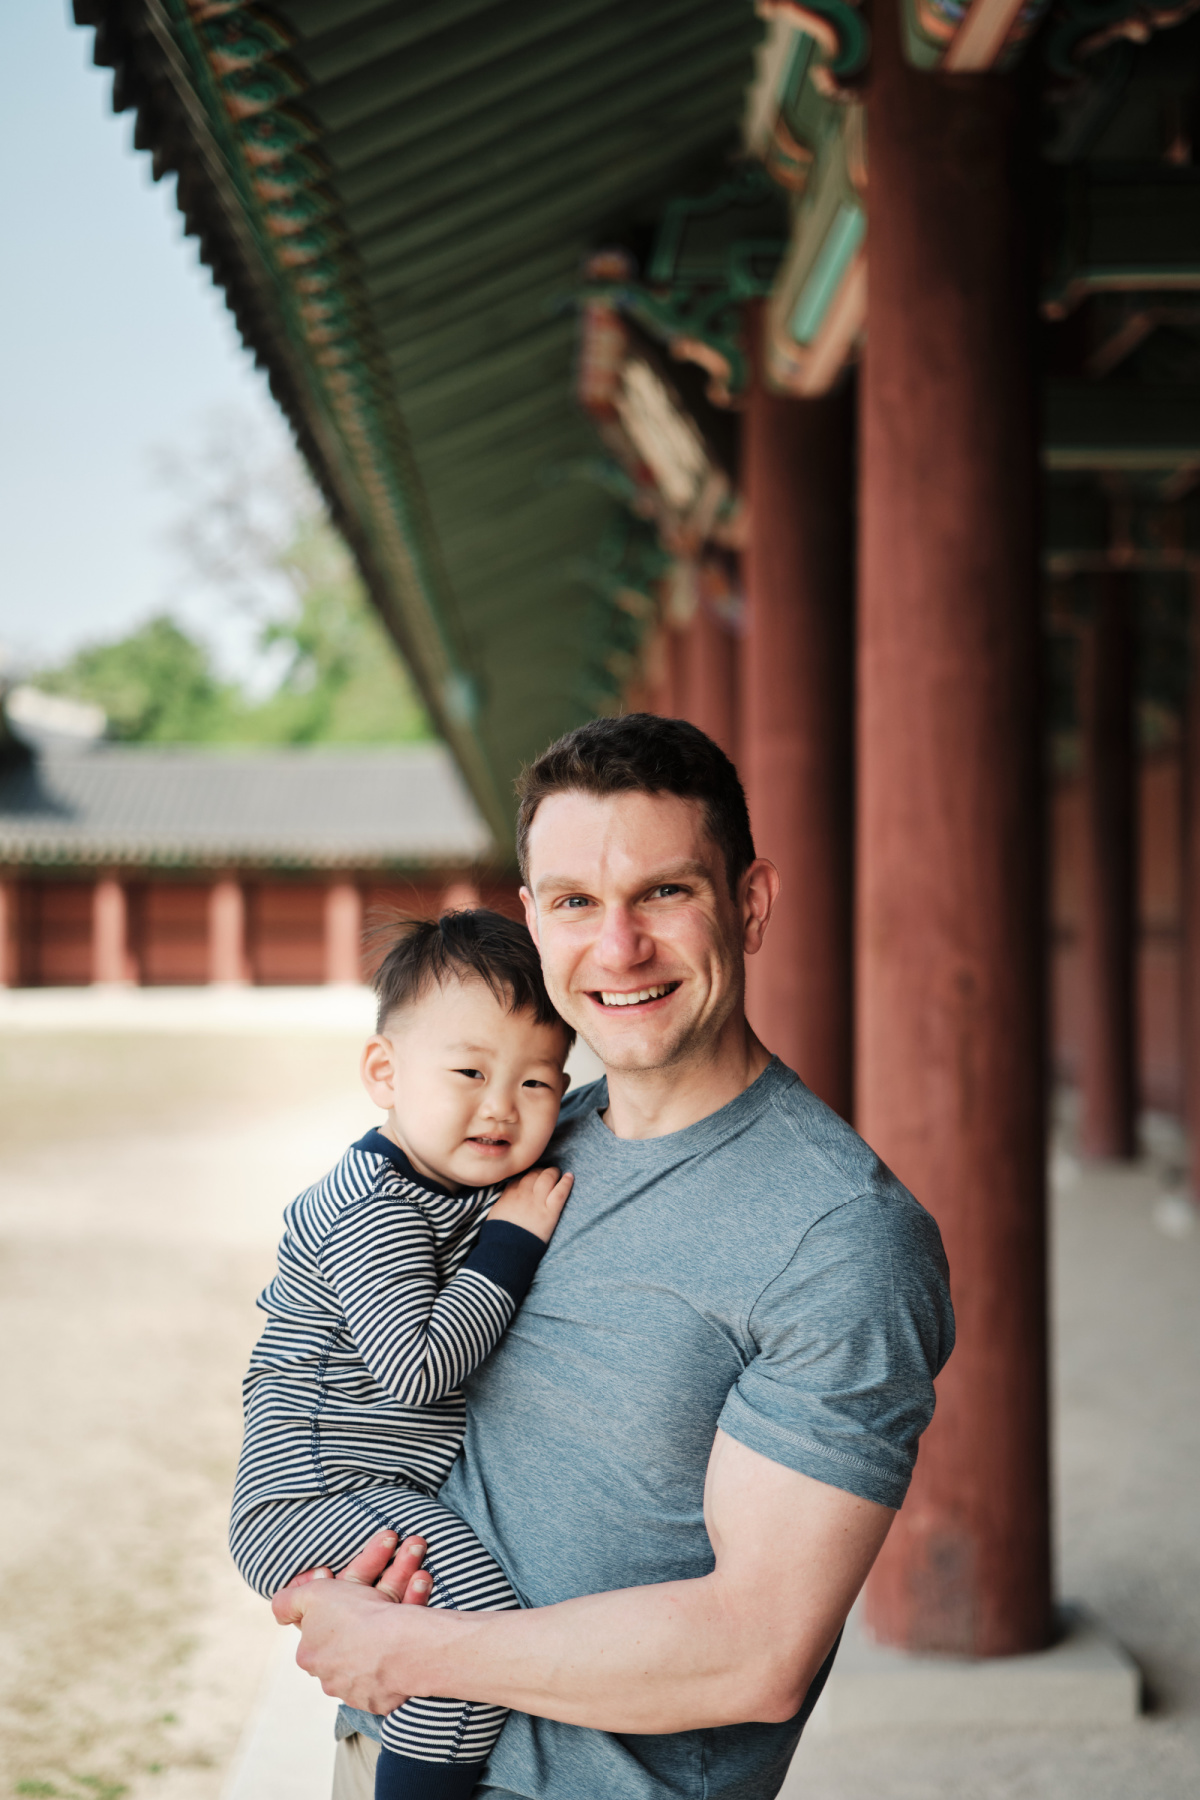 grant and tommy at Changdeokgung Palace